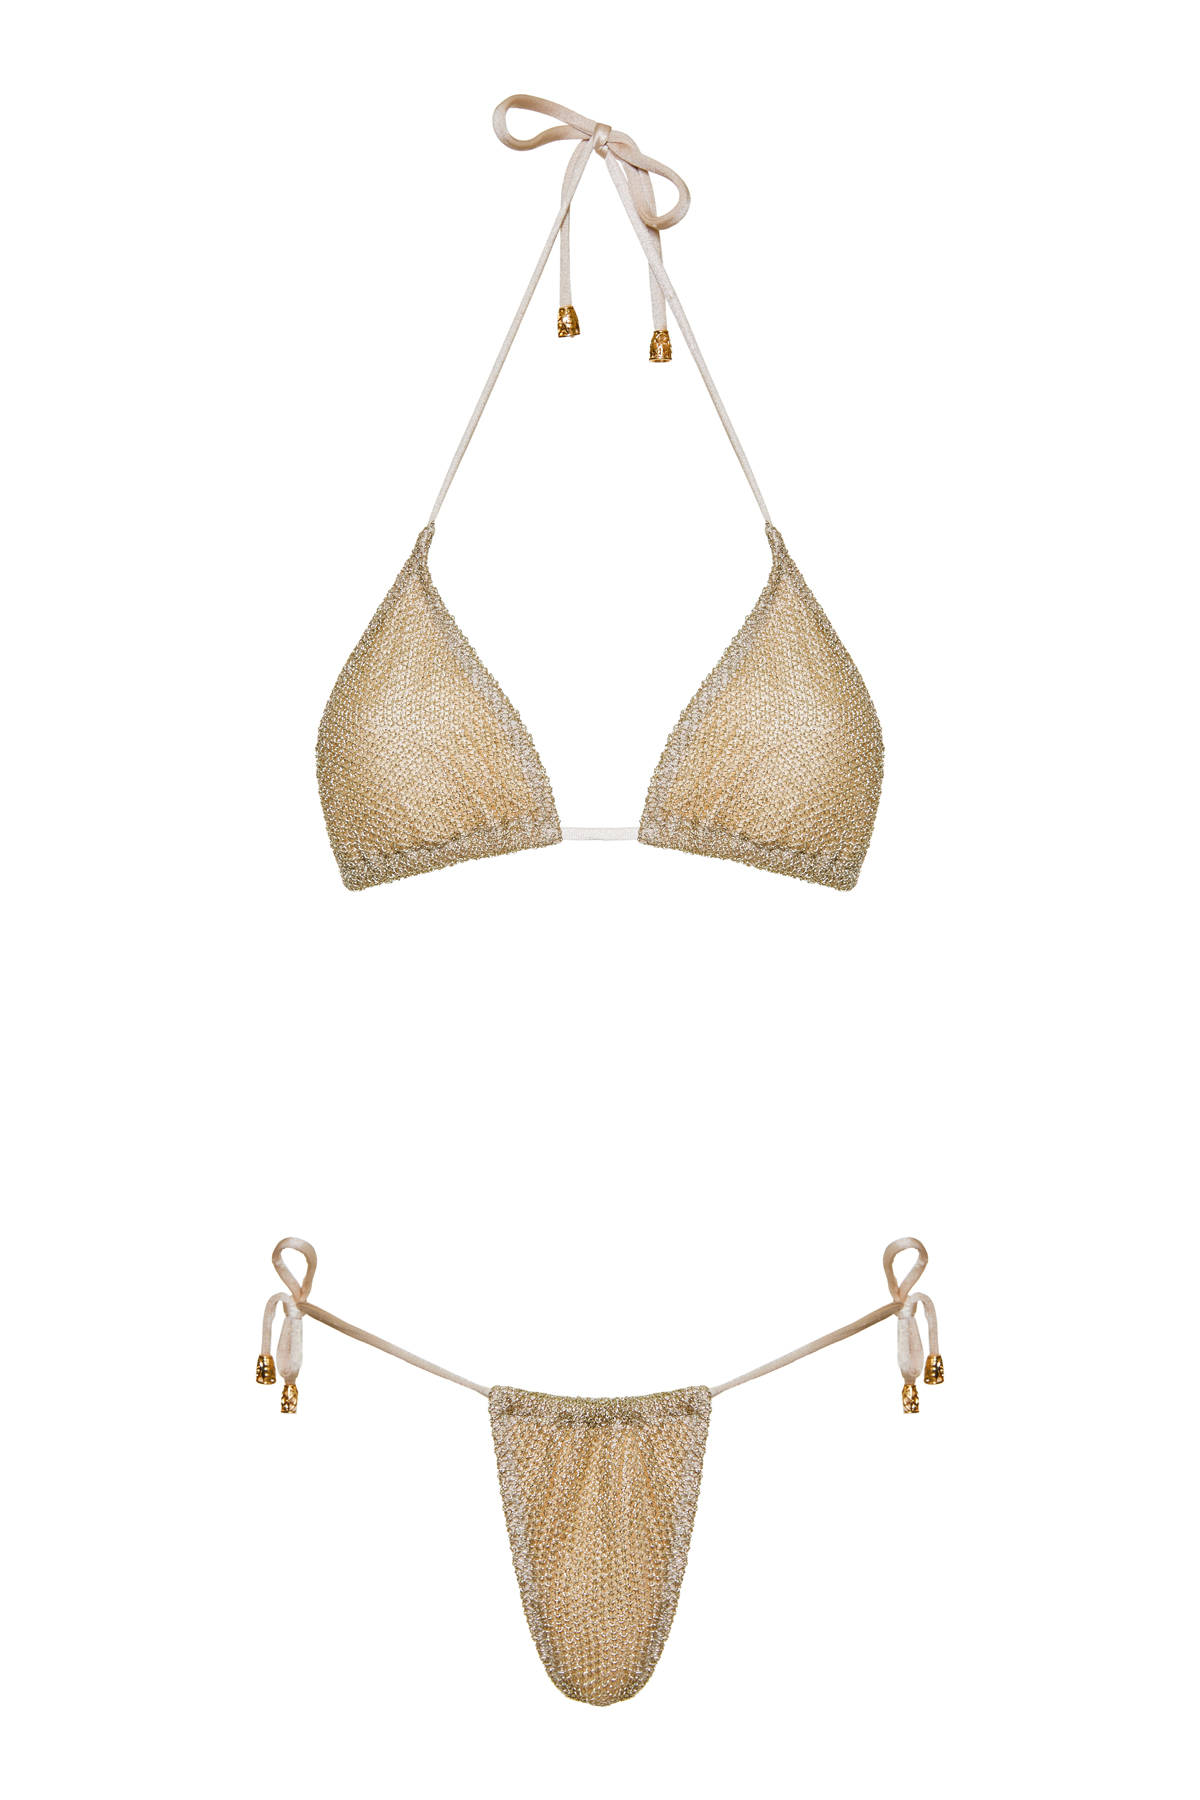 SAINT BARTH GOLD | Katia Panteli | Swimwear and Beachwear Collection